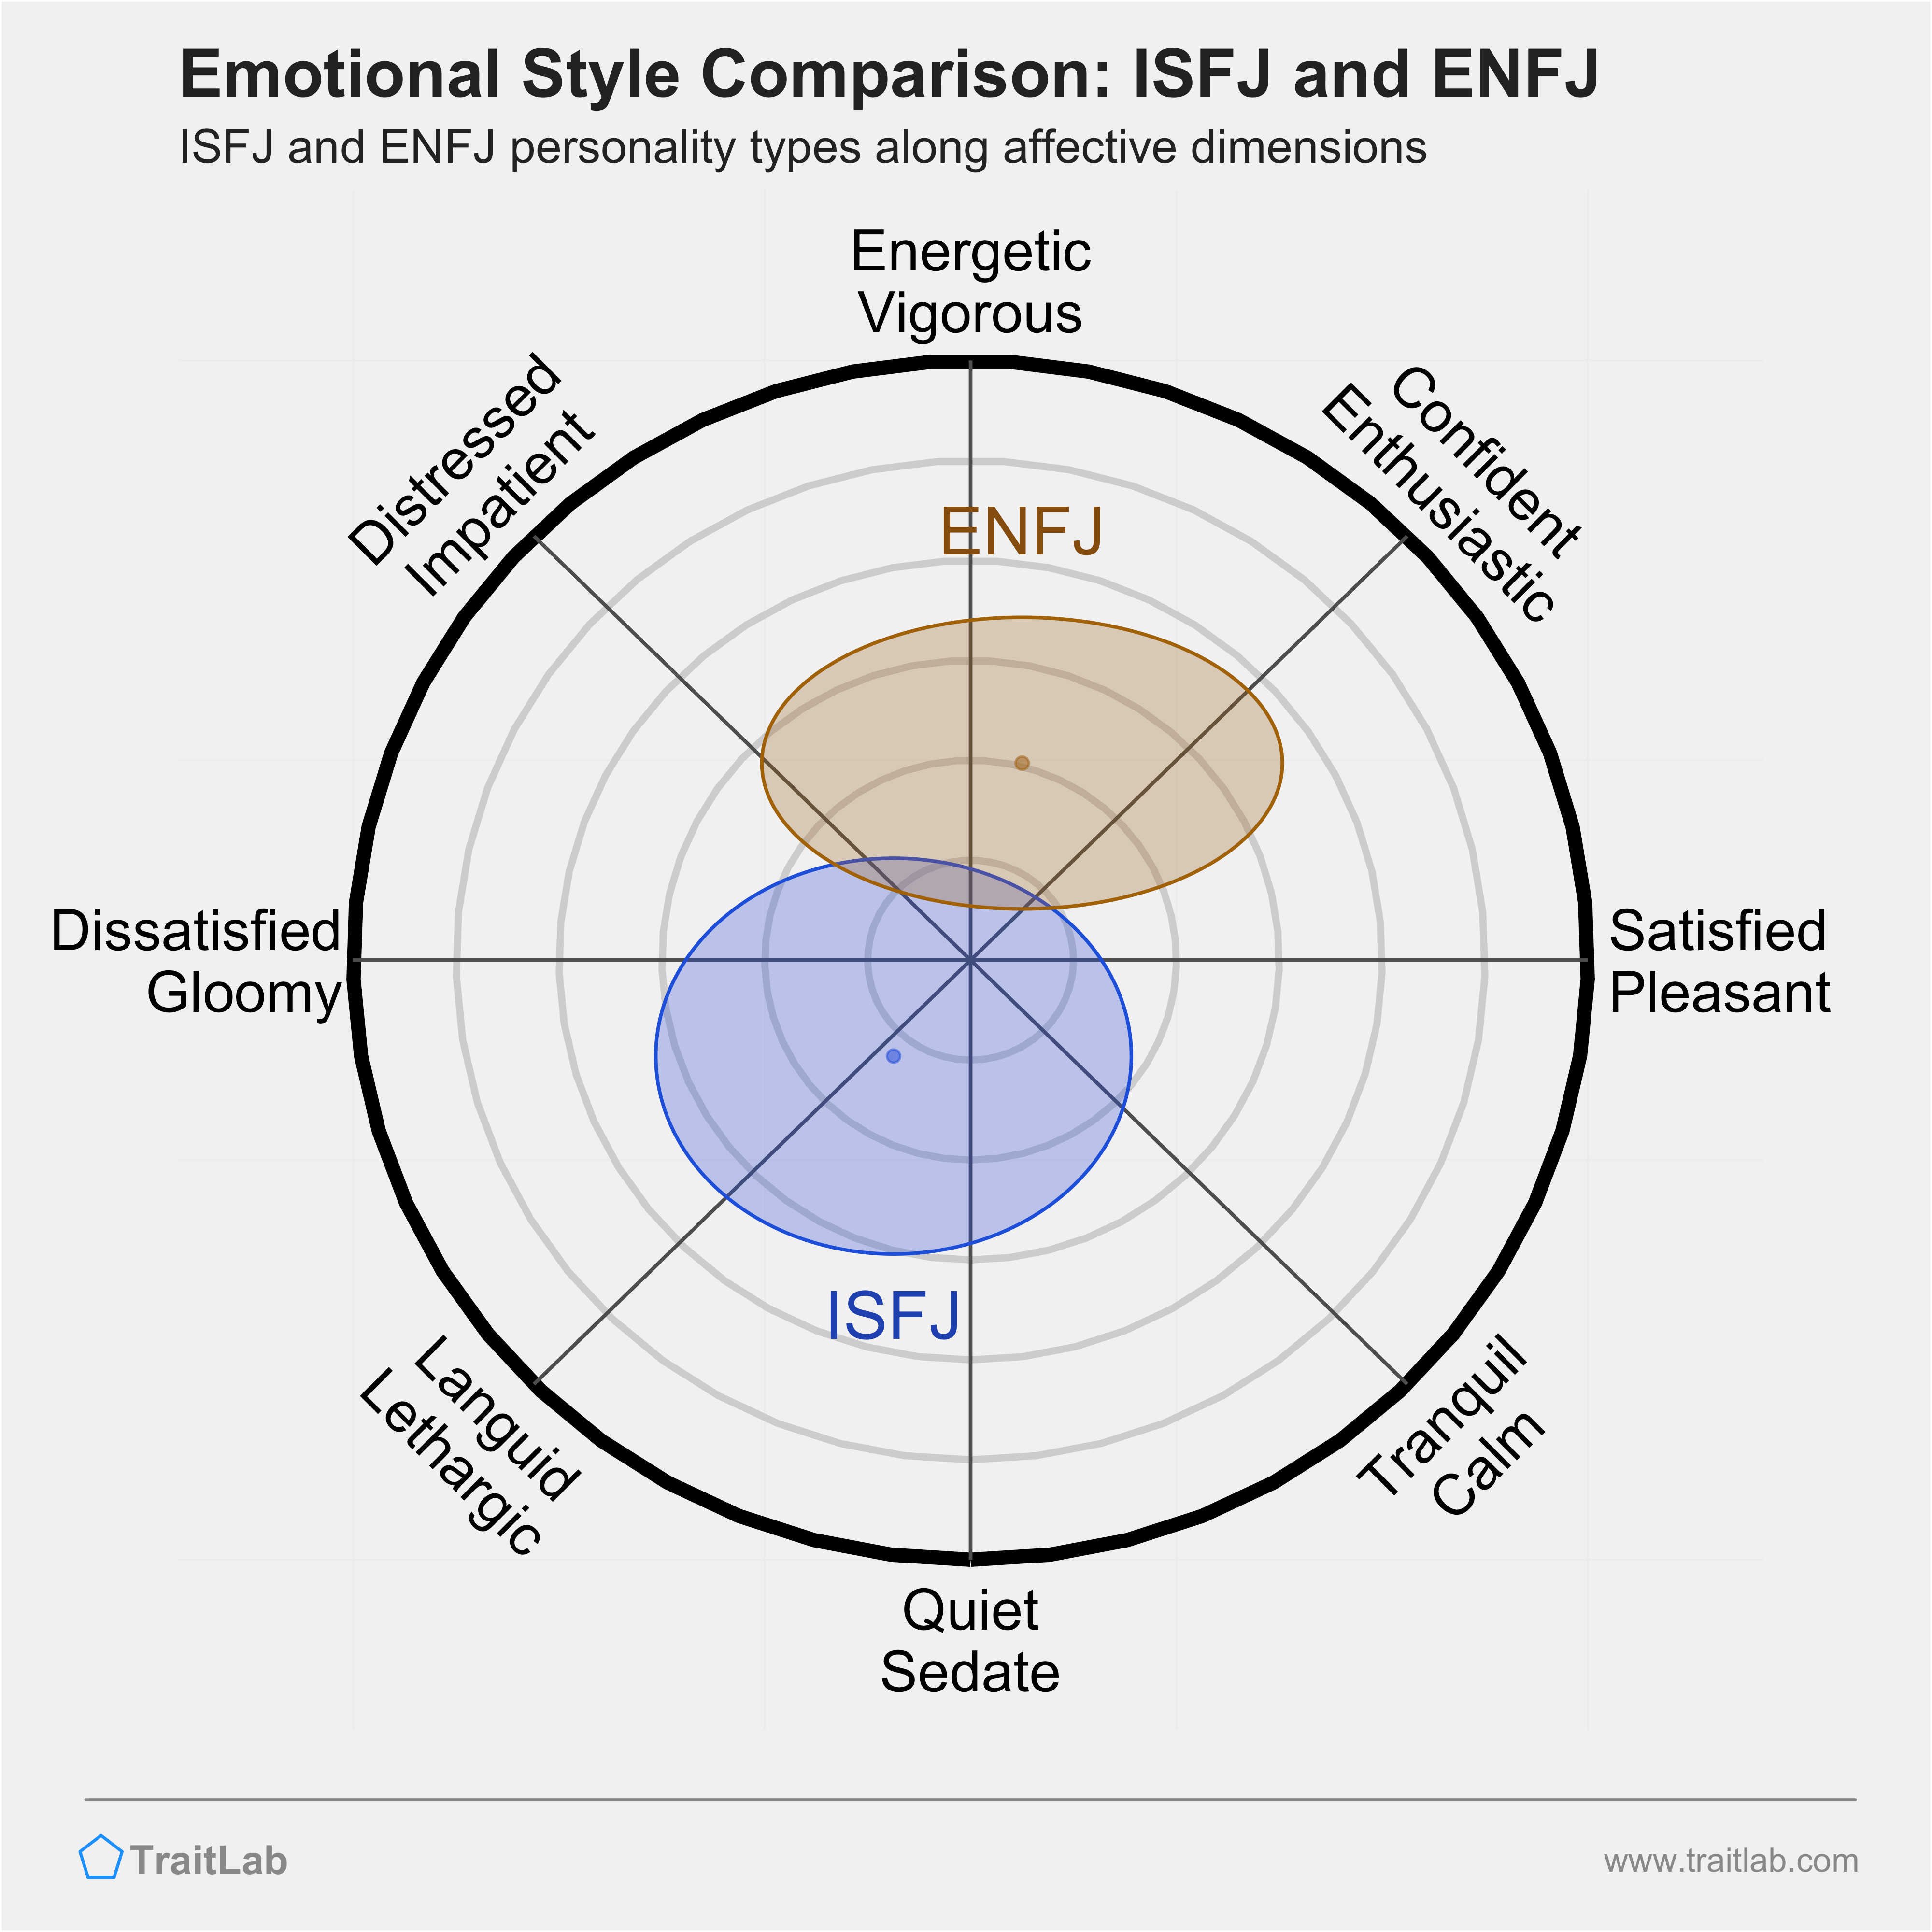 ISFJ and ENFJ comparison across emotional (affective) dimensions